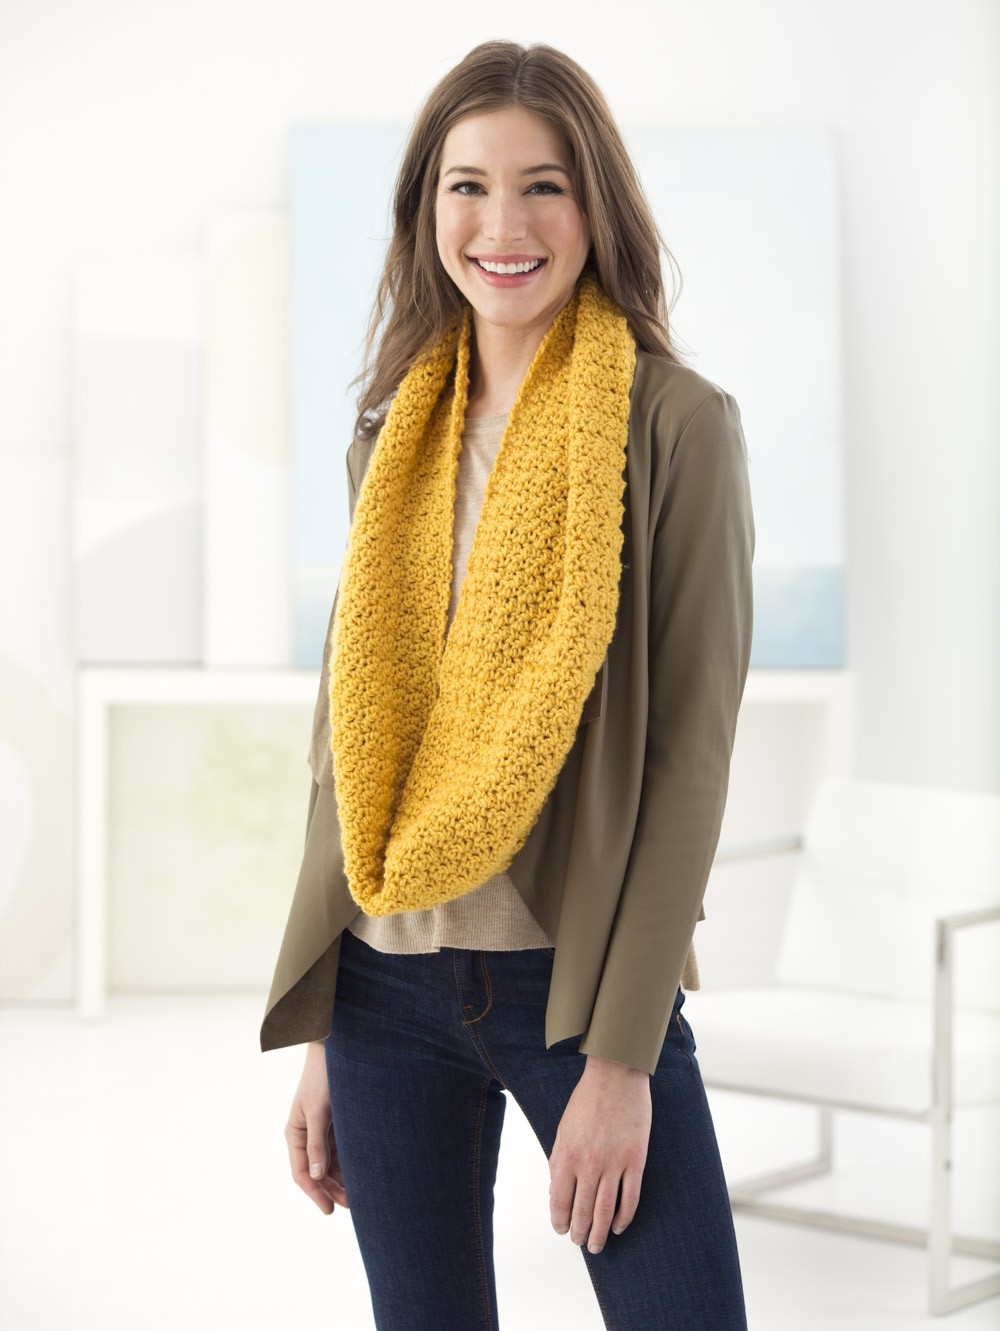 Vanna's Choice Yarn: Heartfelt Gifts to Knit & Crochet – Lion Brand Yarn